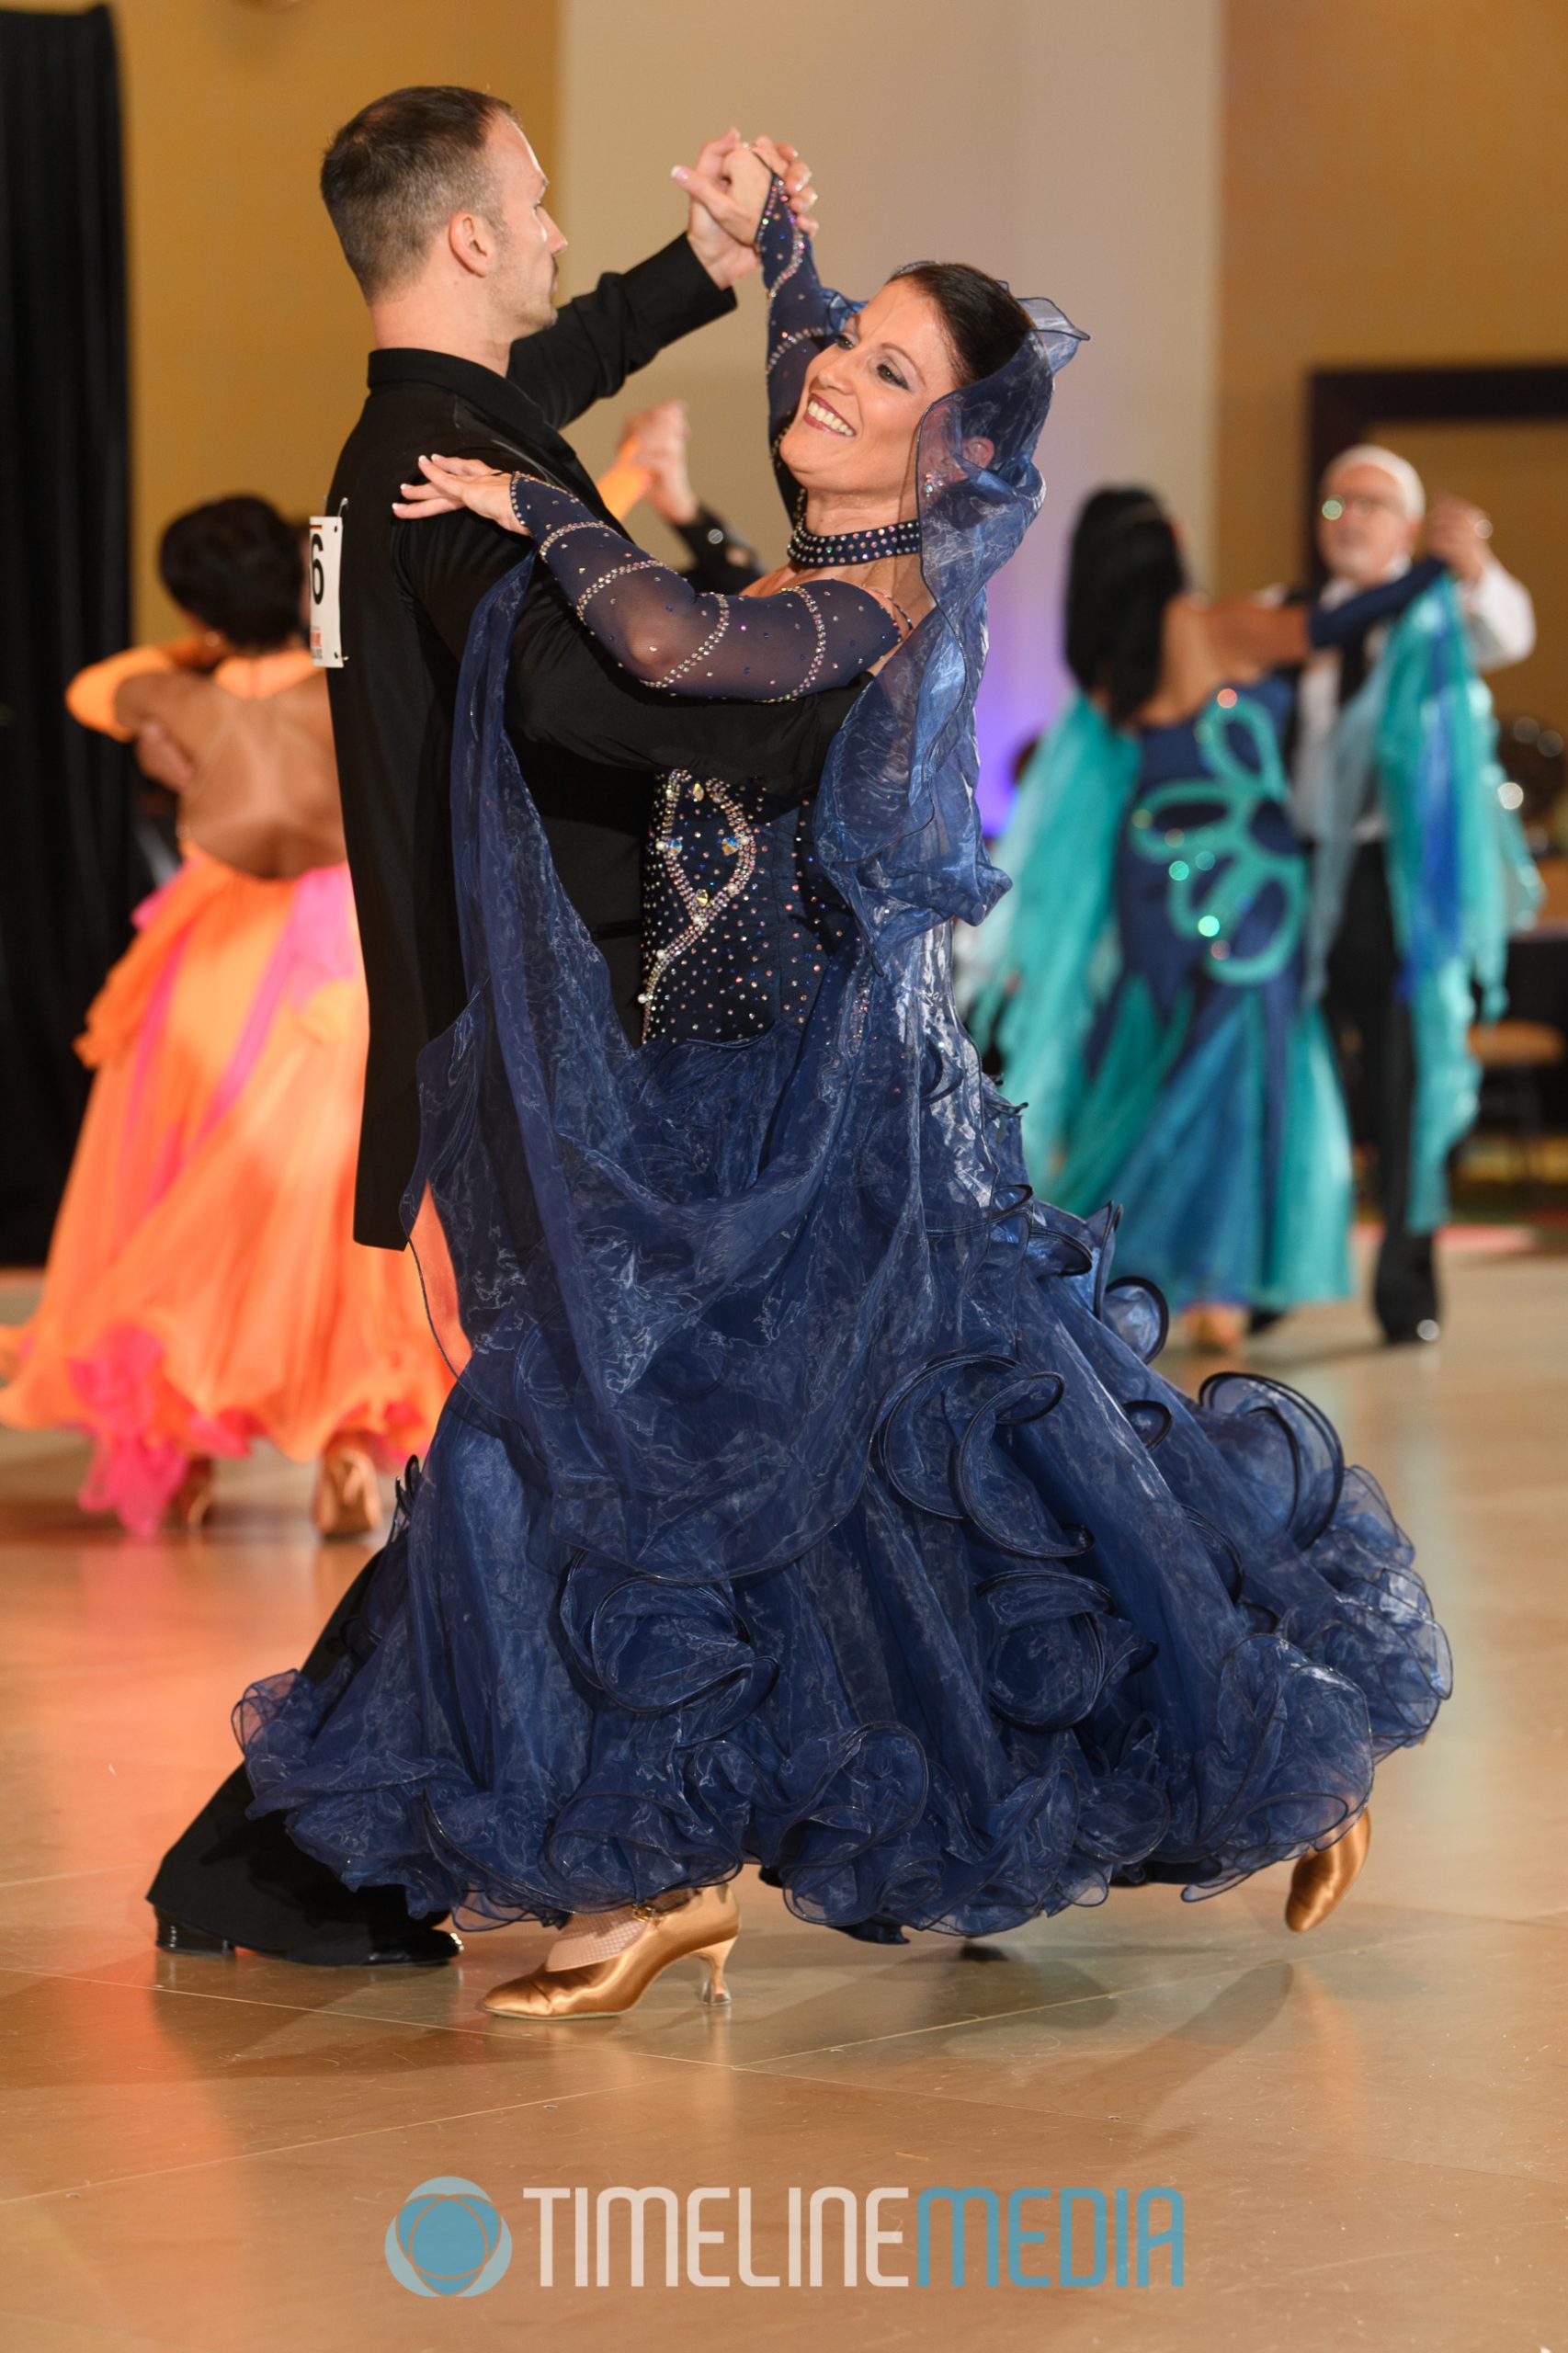 Smooth dancers at PA Ballroom Scrimmage ©TimeLine Media